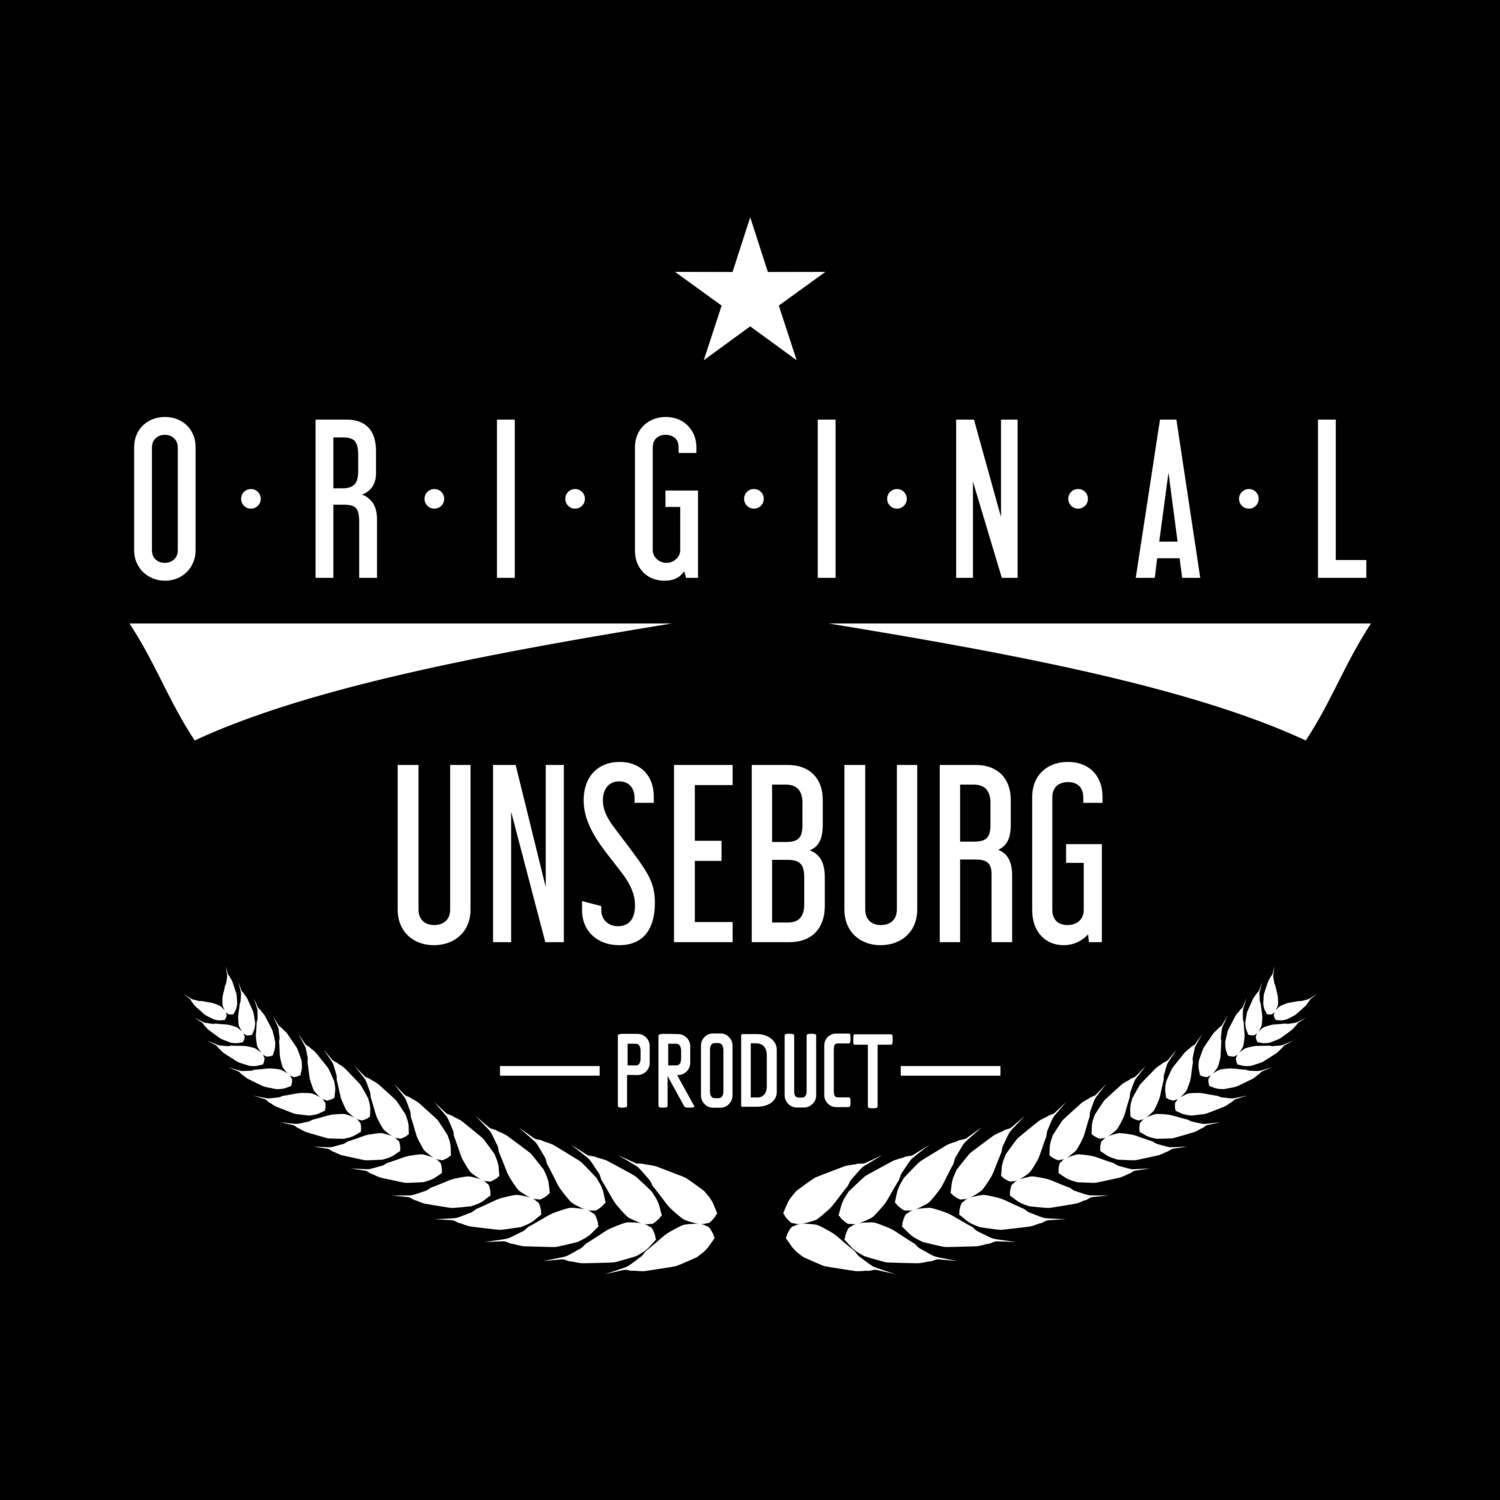 Unseburg T-Shirt »Original Product«